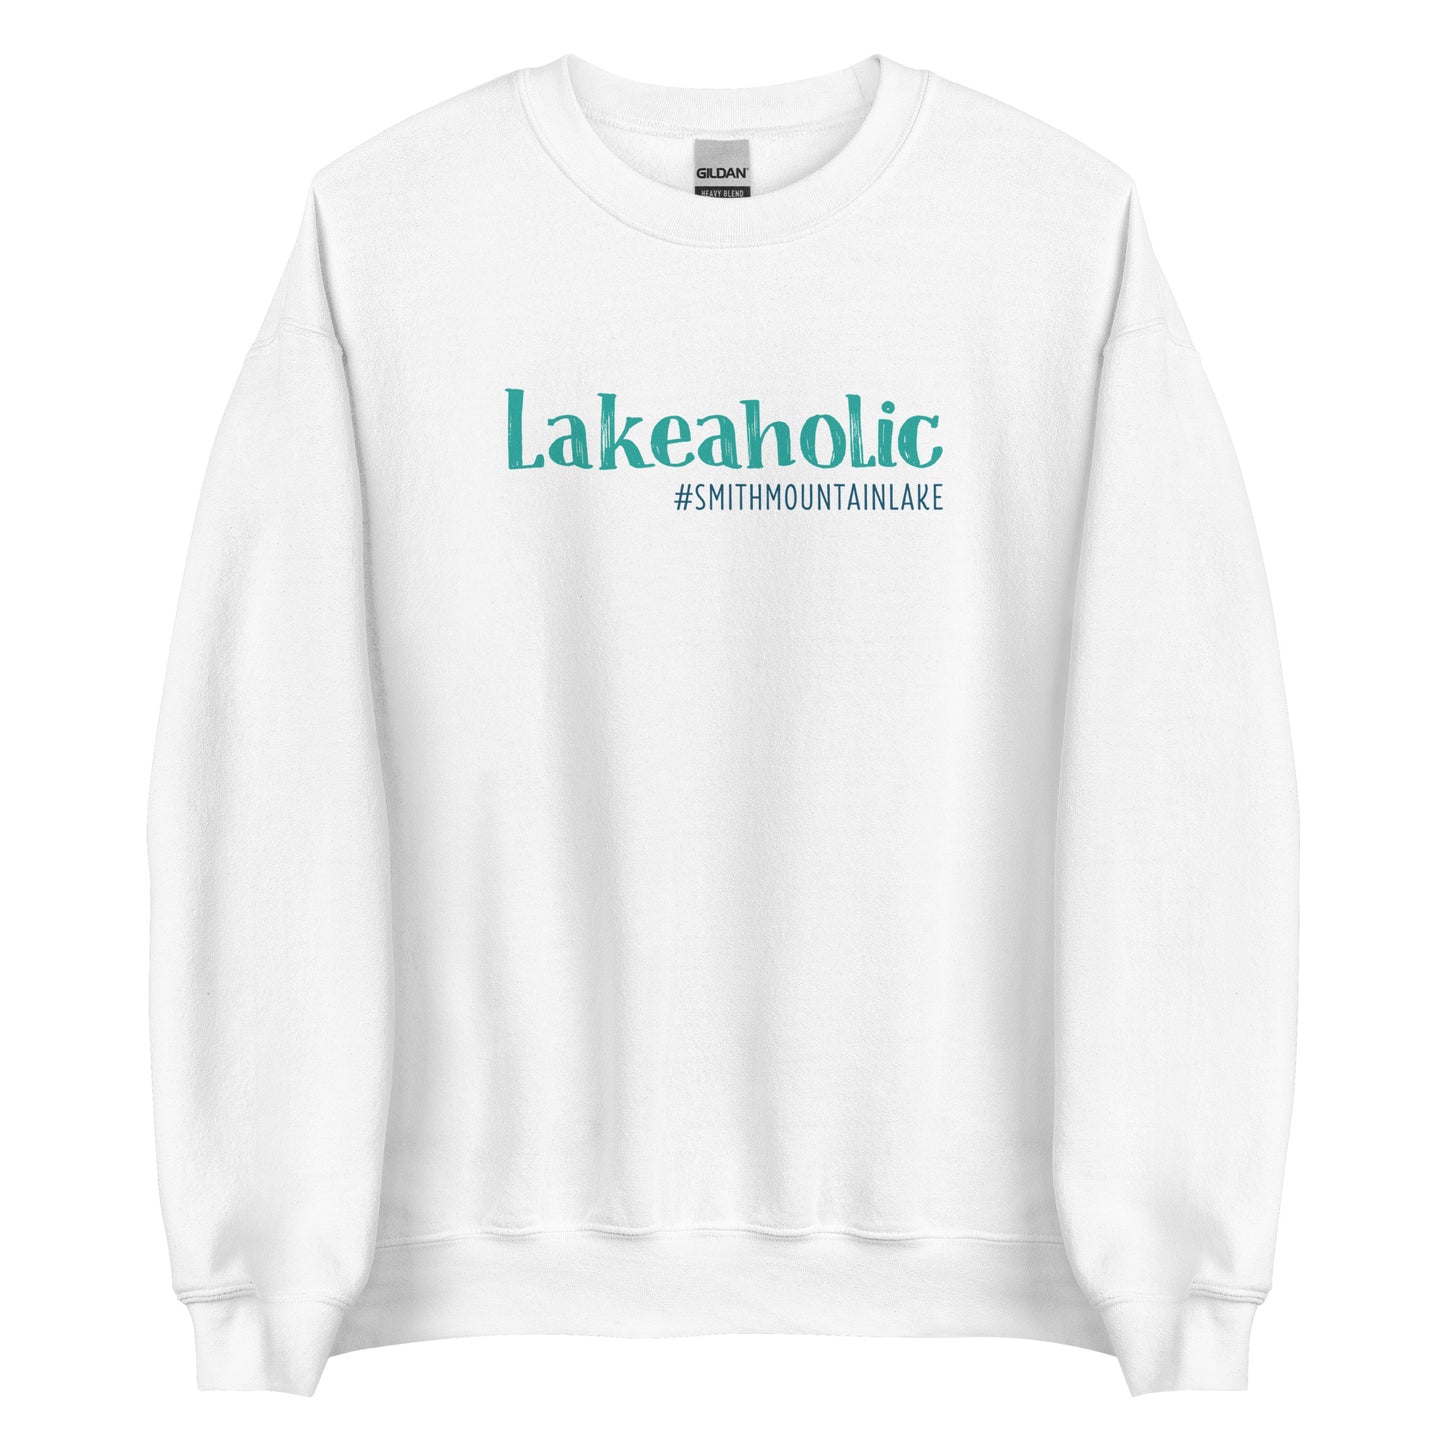 Lakeaholic Smith Mountain Lake Unisex Crewneck Sweatshirt